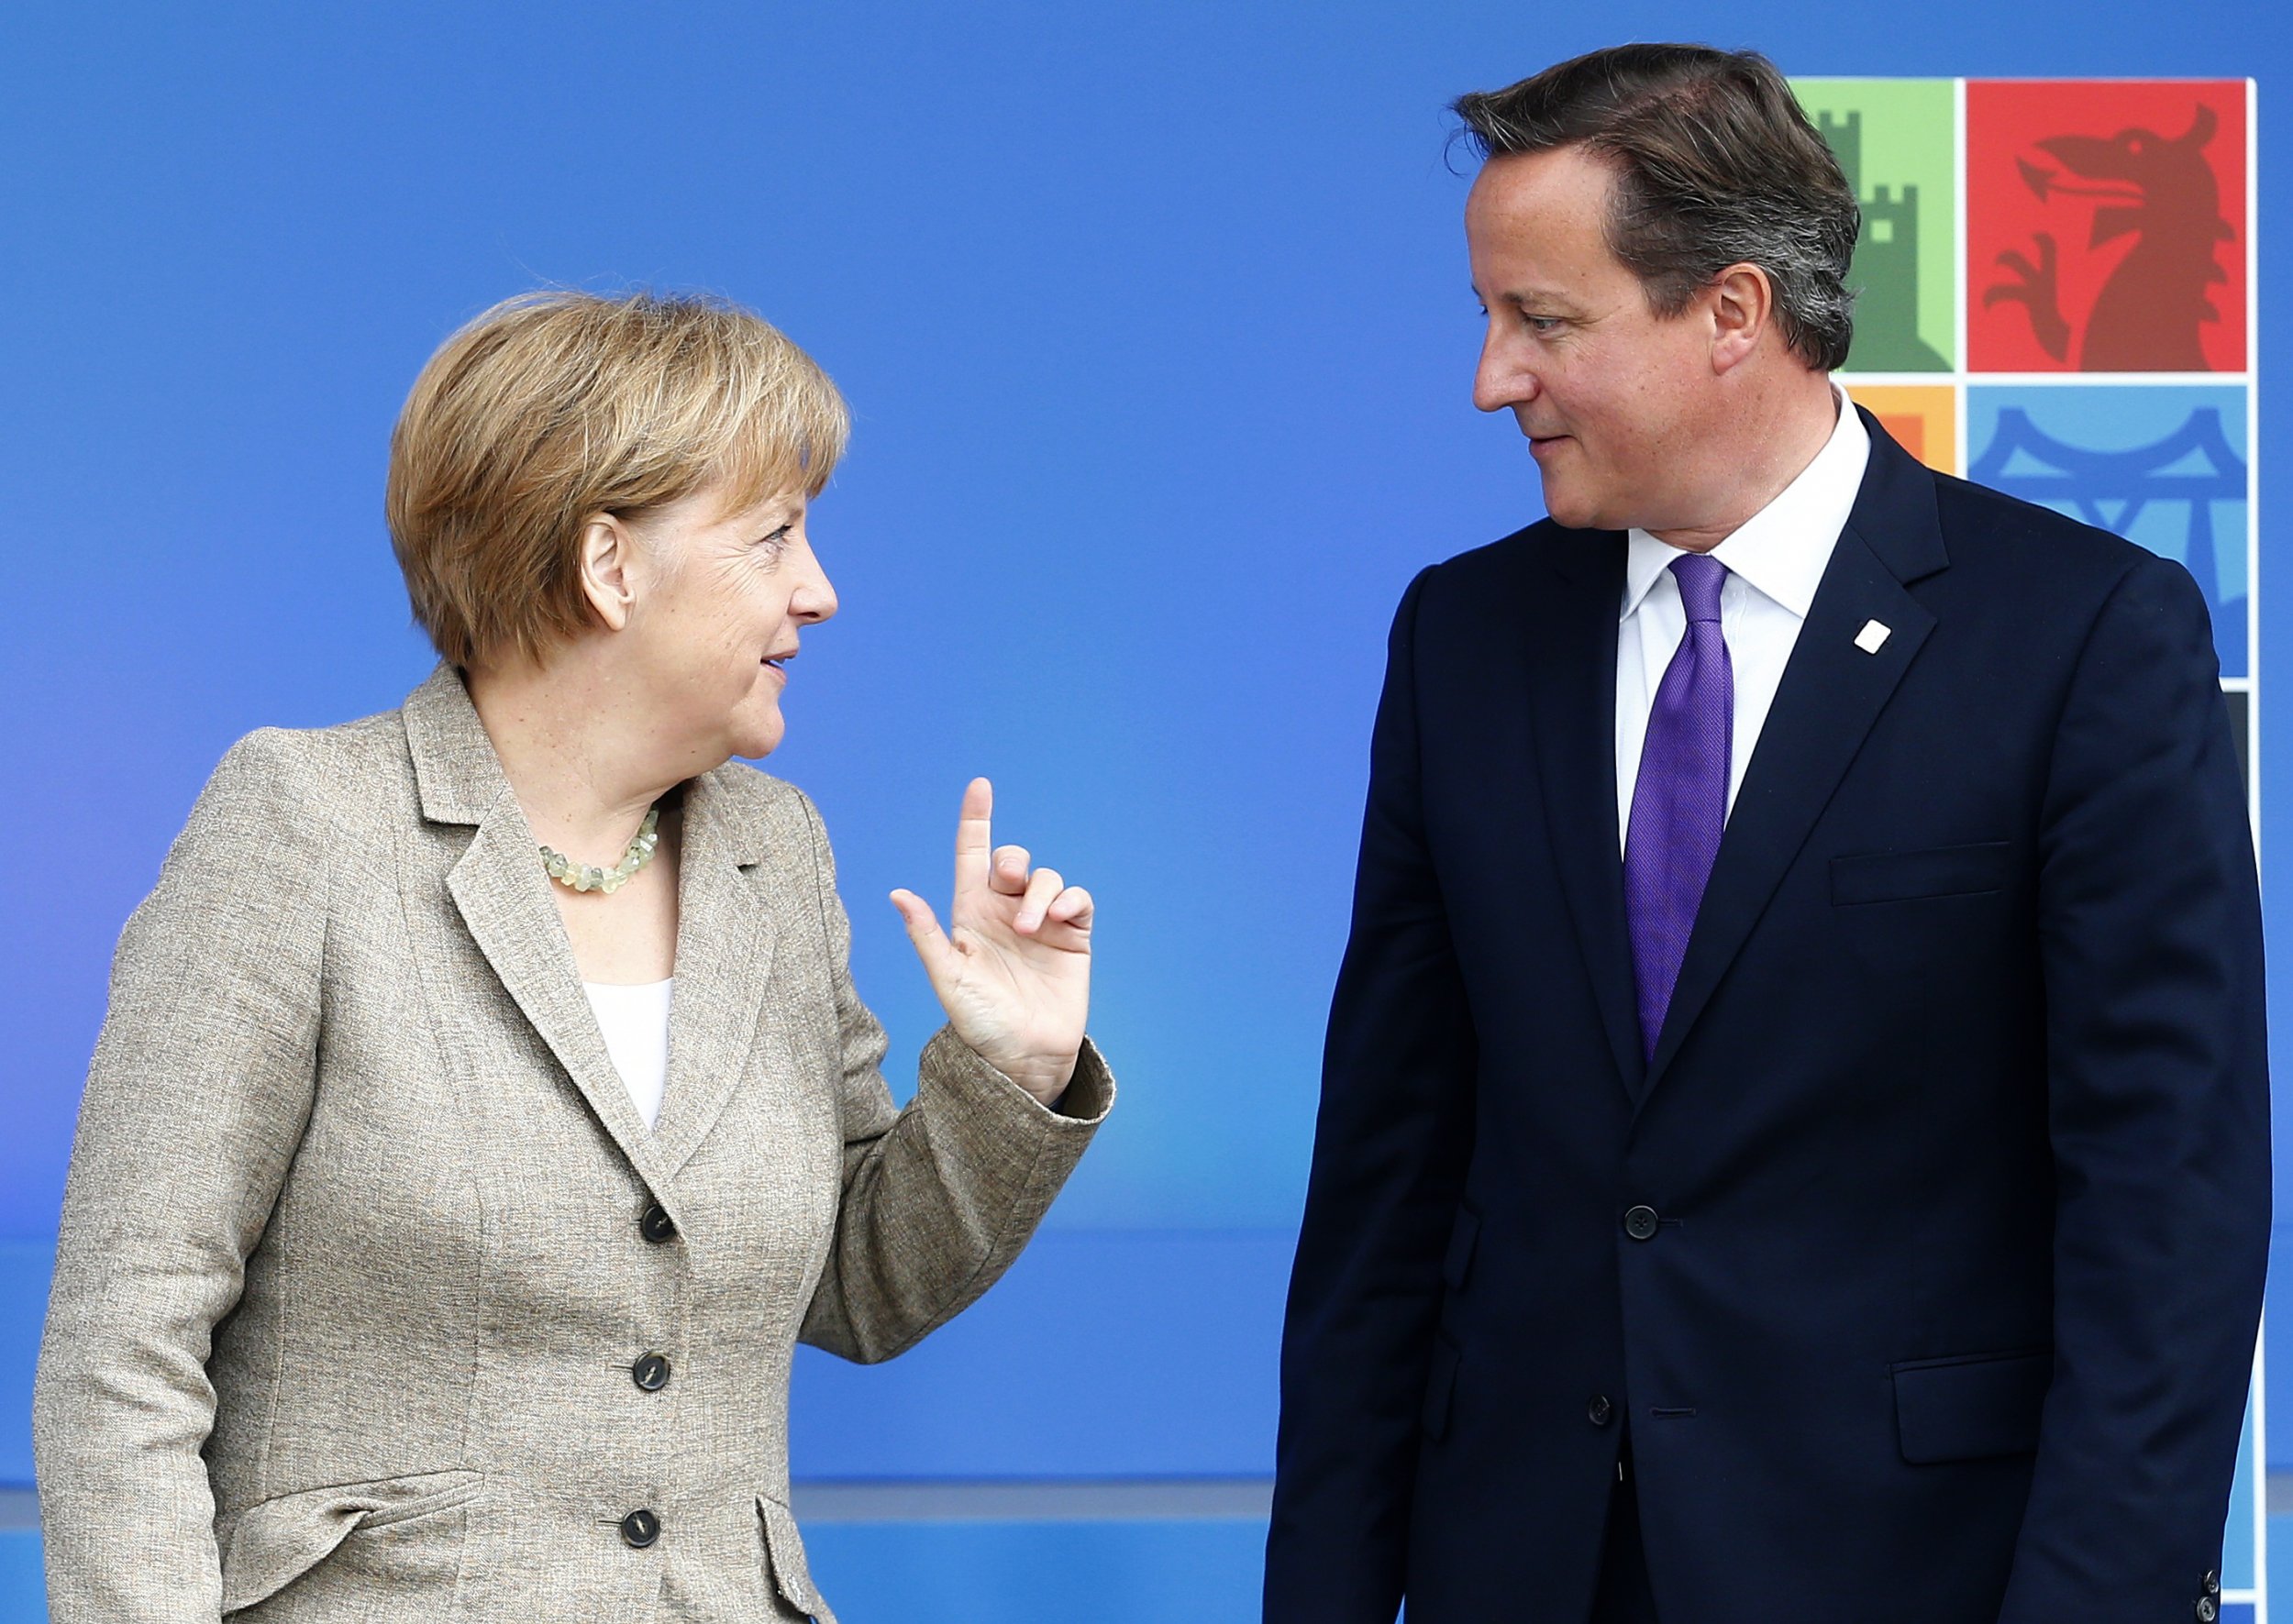 Cameron and Merkel